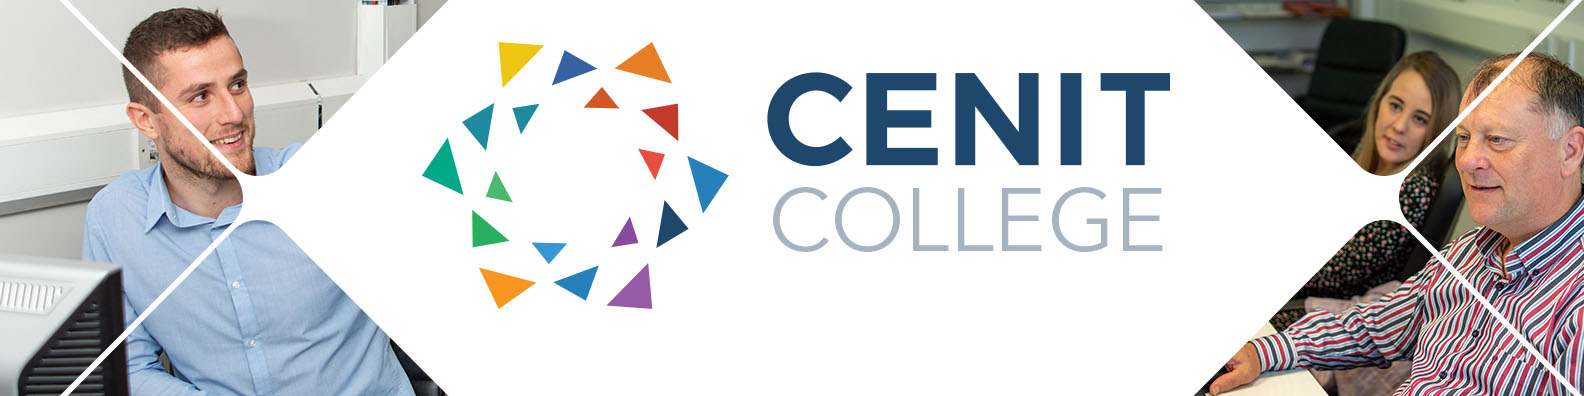 Cenit College company image